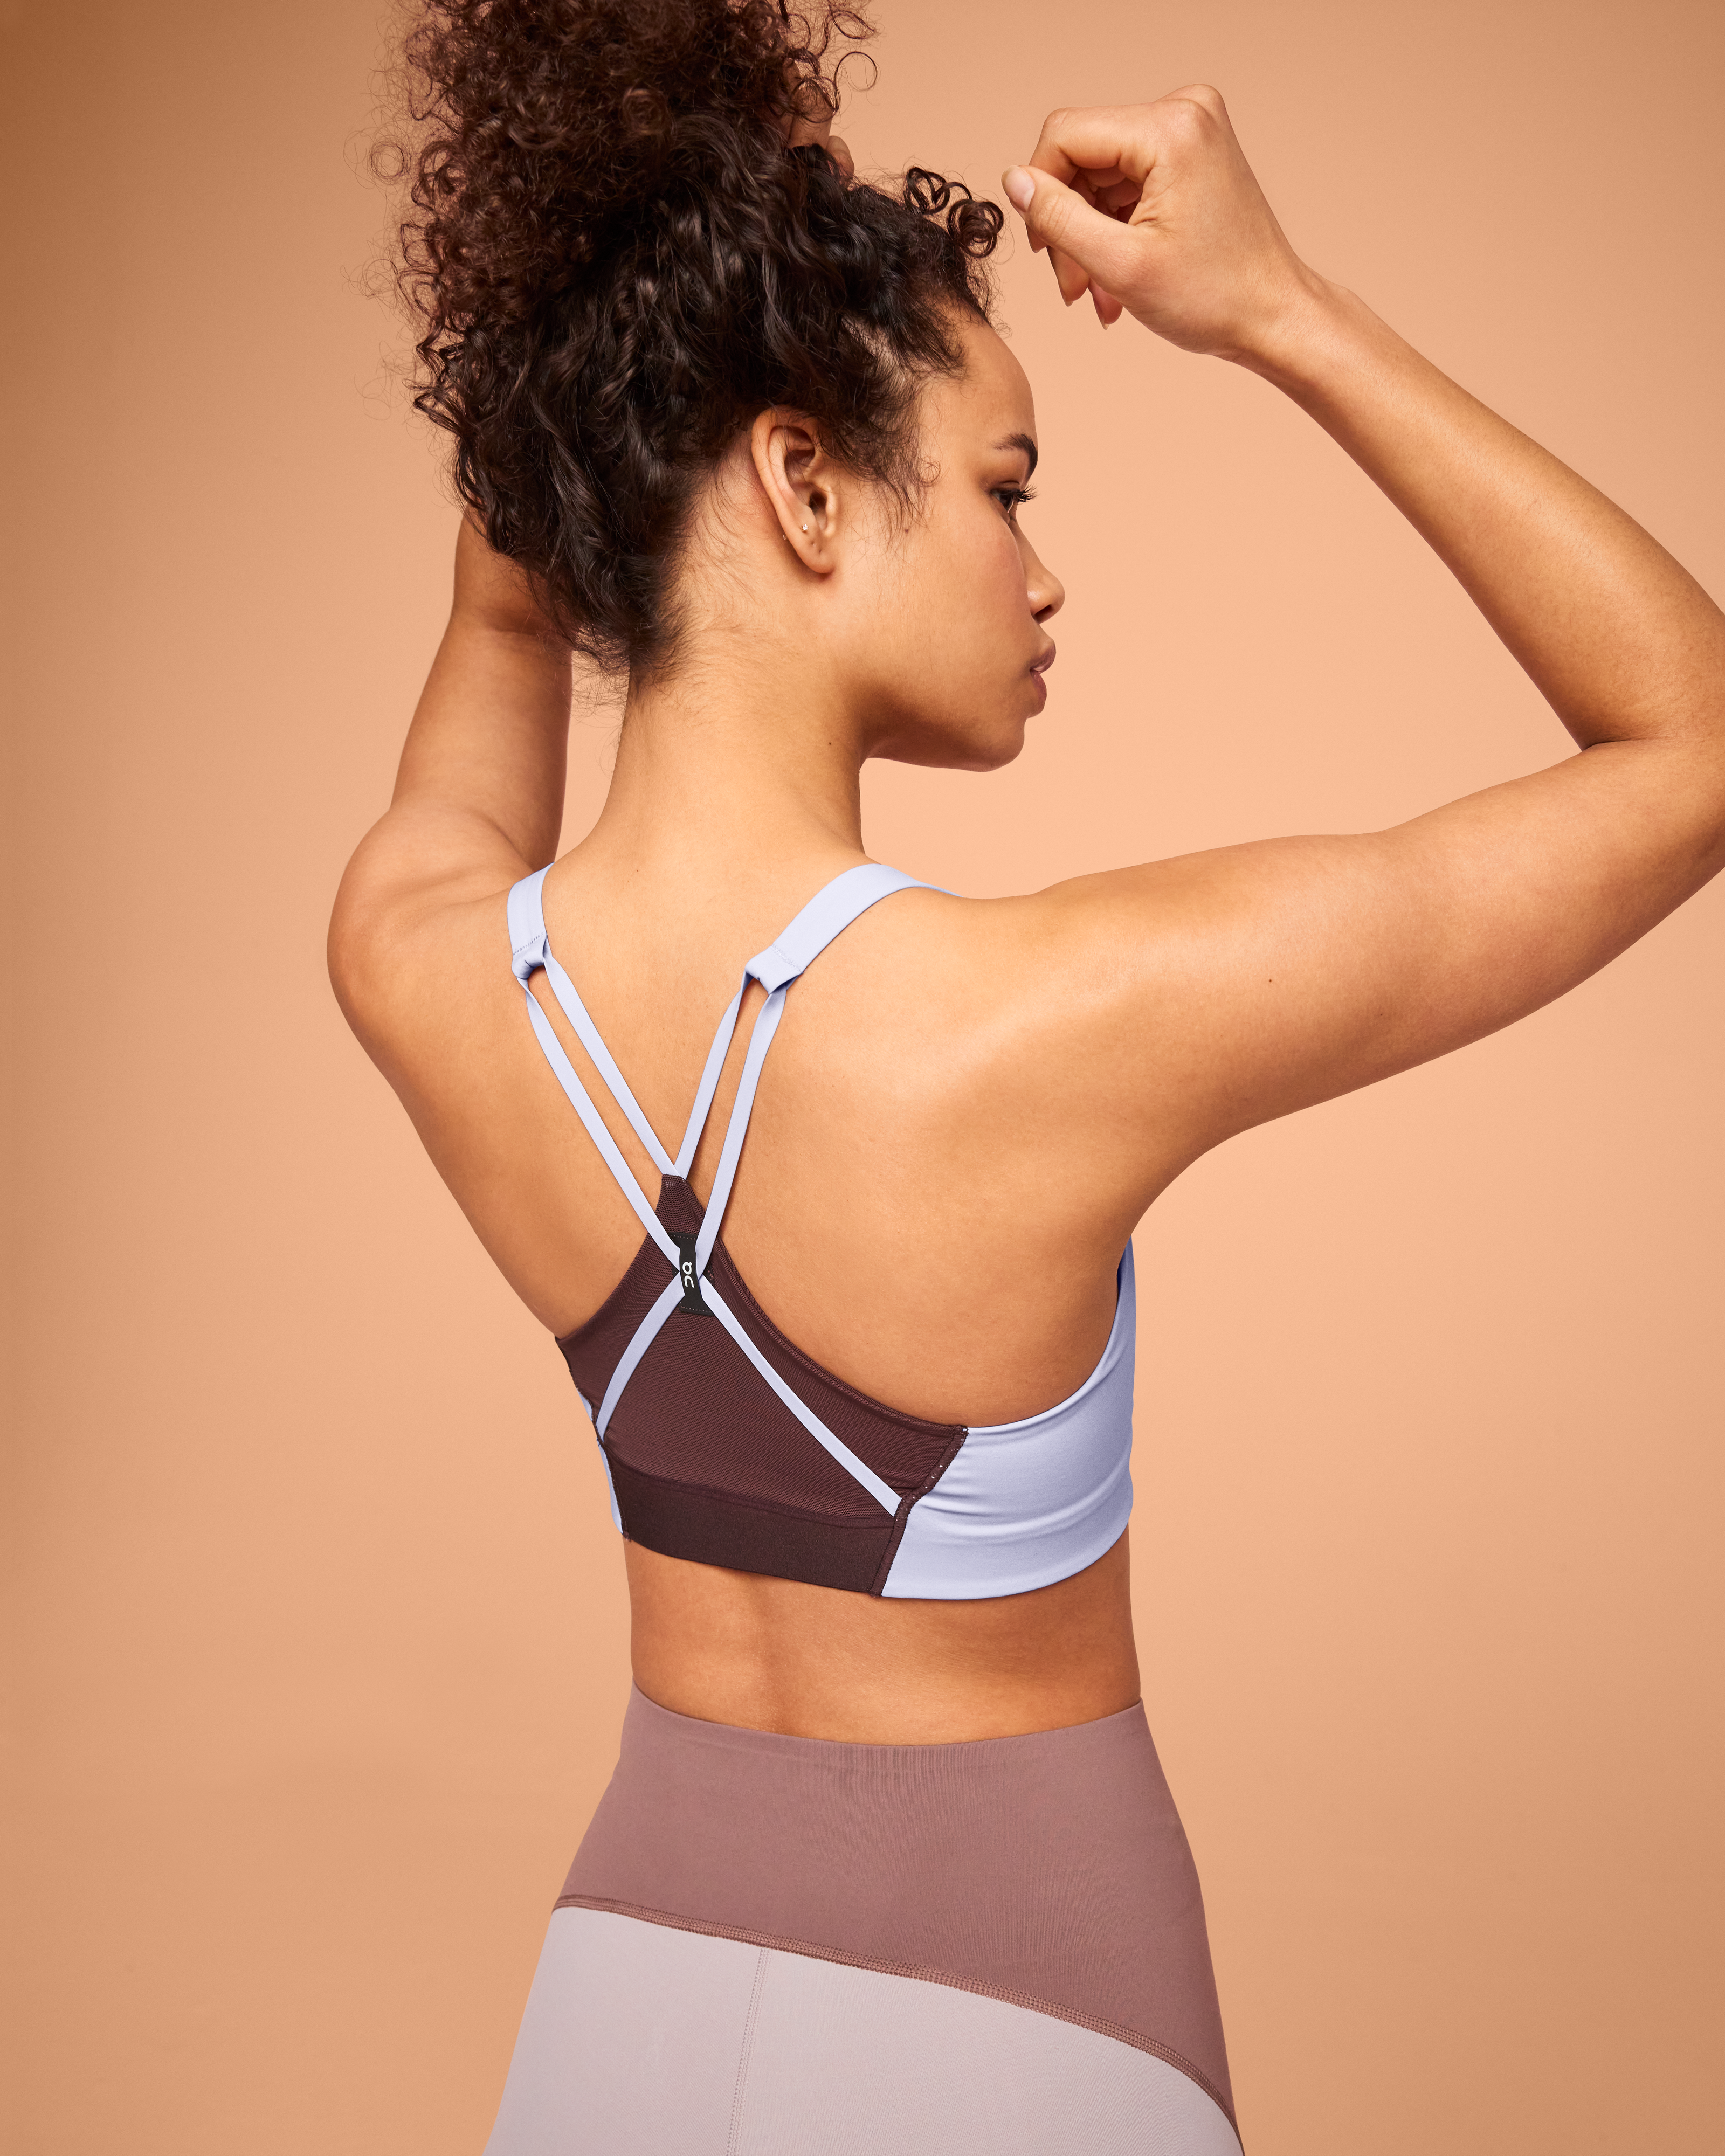 Buy DISOLVE� Women 5D Wireless Contour Bra - Soft Women Bras Hot Cute Lace  Breathable Underwear Seamless for Sports Yoga RunningSize (28 Till 34) (C,  Beige 4.0) at